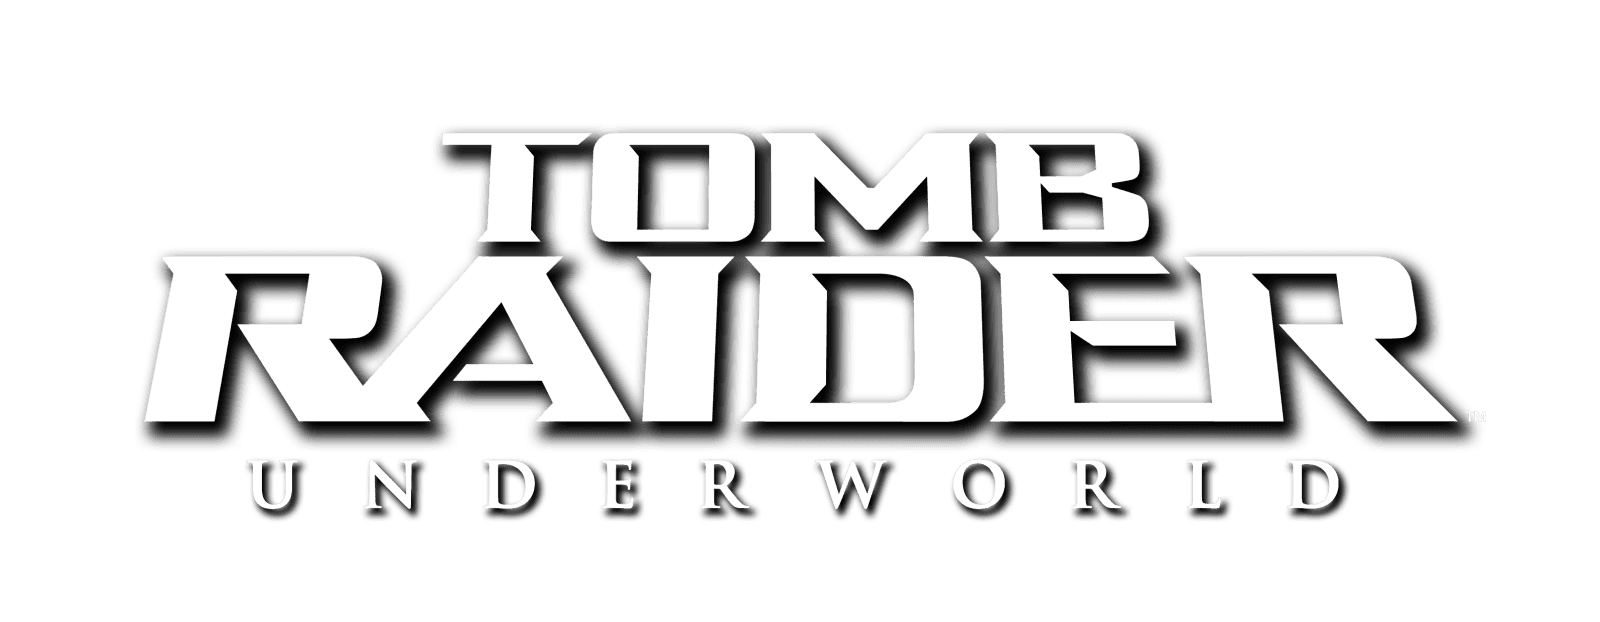 Tomb Raider Underworld logo